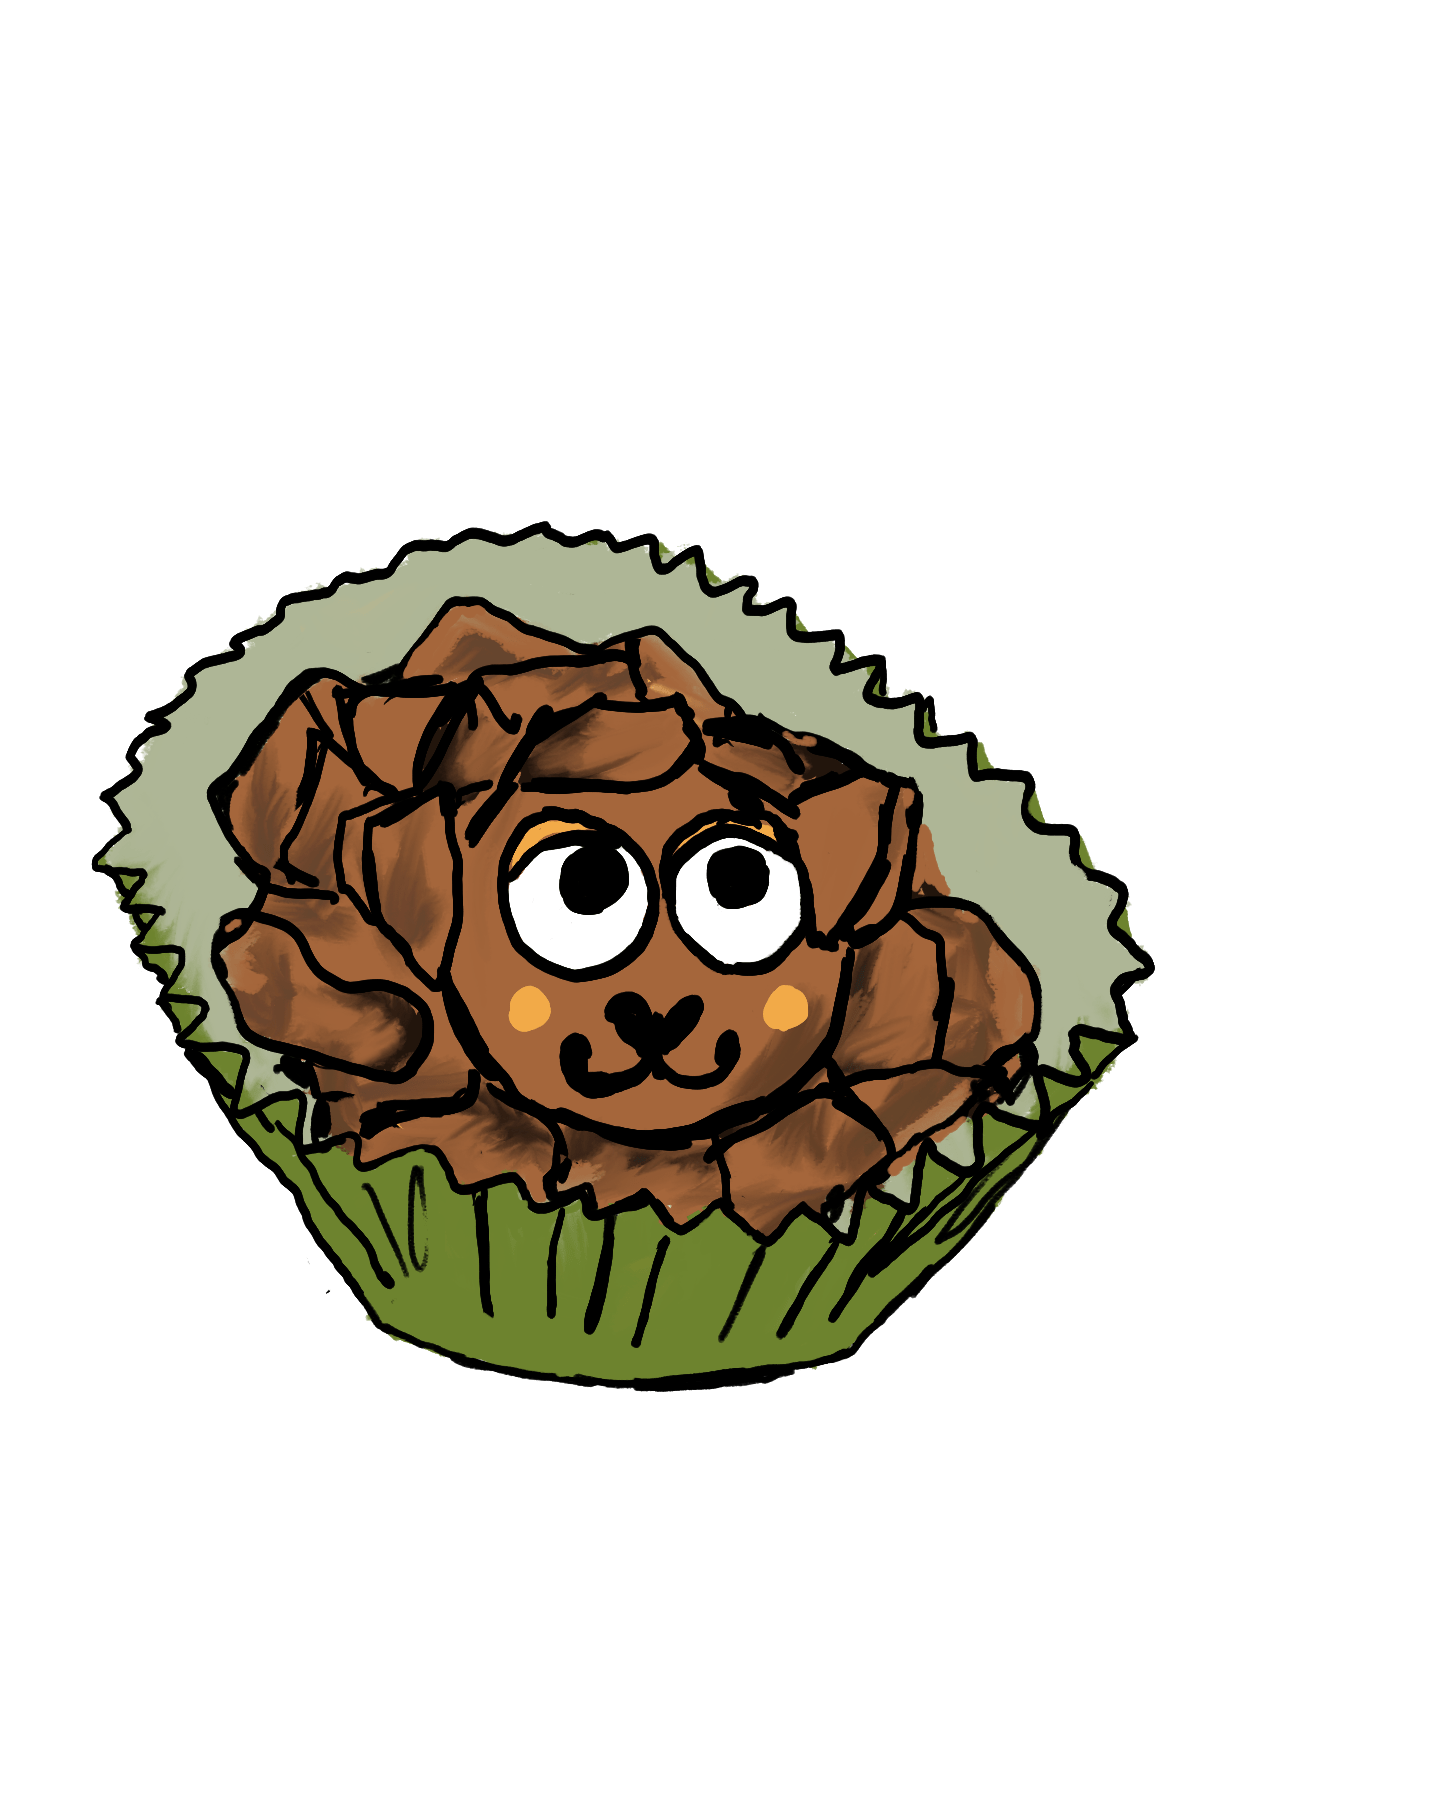 Illustrated image of a hedgehog crispy cupcake